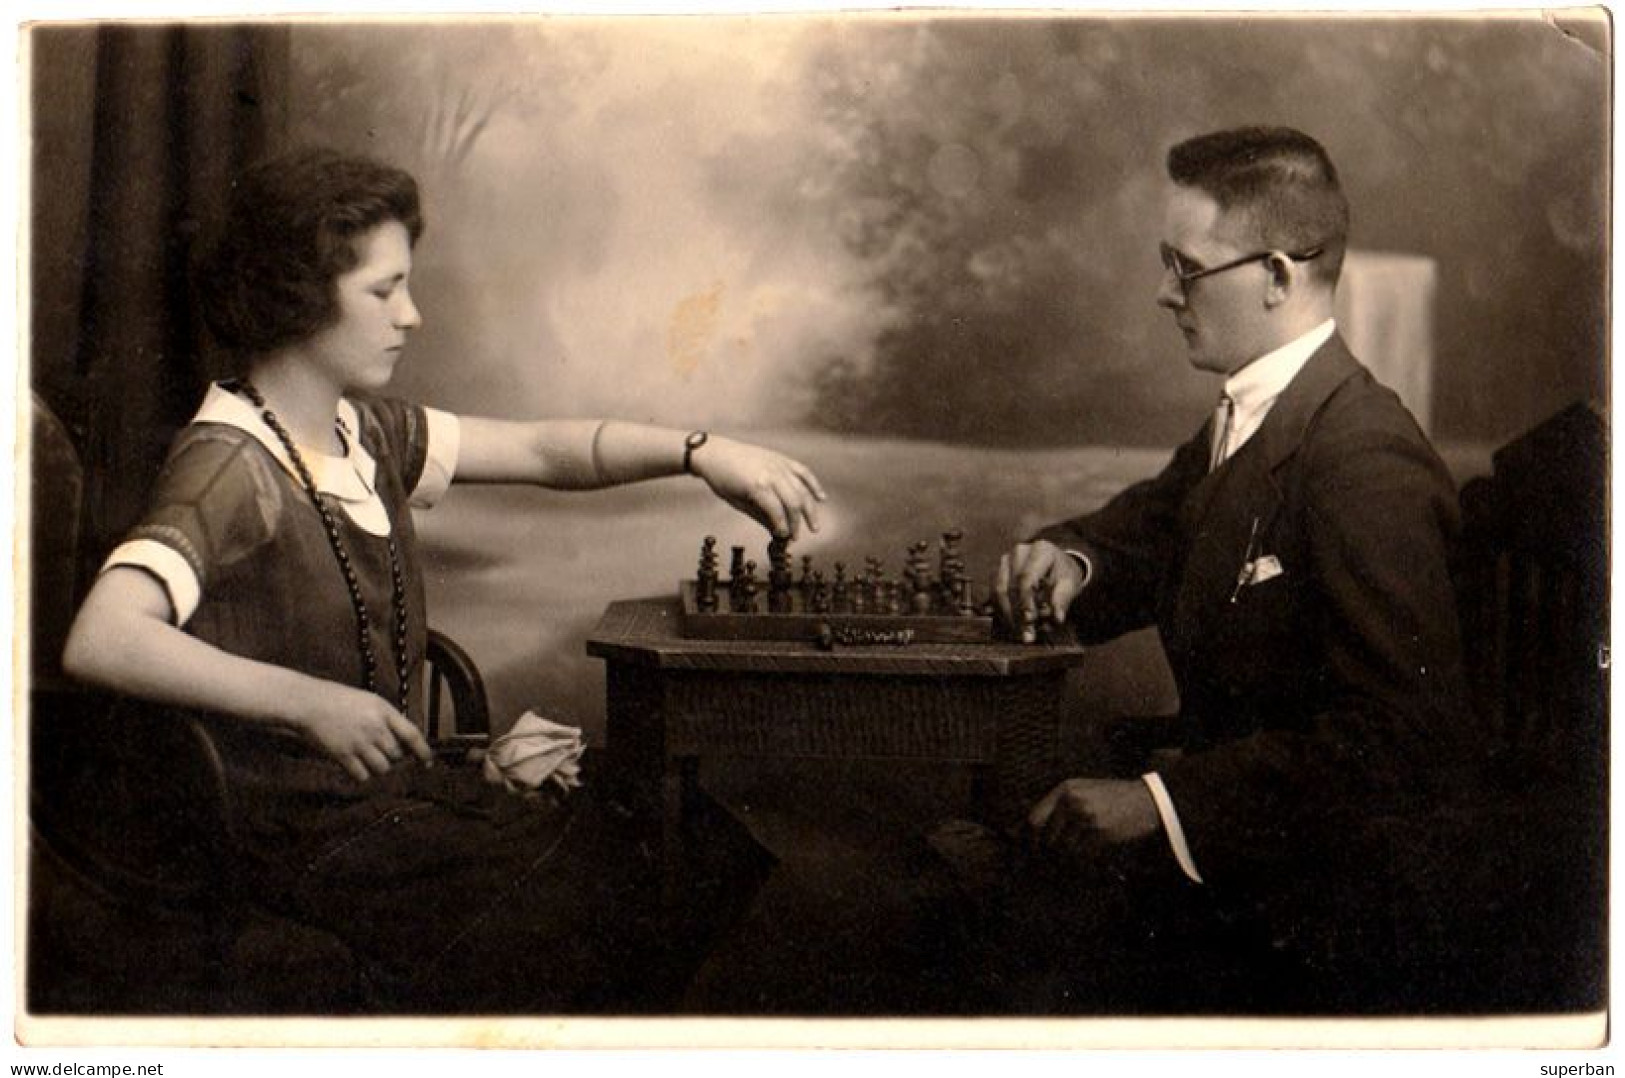 ECHECS / CHESS : ROUMANIE / ROMANIA : CHESS GAME / PARTIE D'ECHECS - CARTE VRAIE PHOTO / REAL PHOTO ~ 1935 - '40 (an322) - Chess